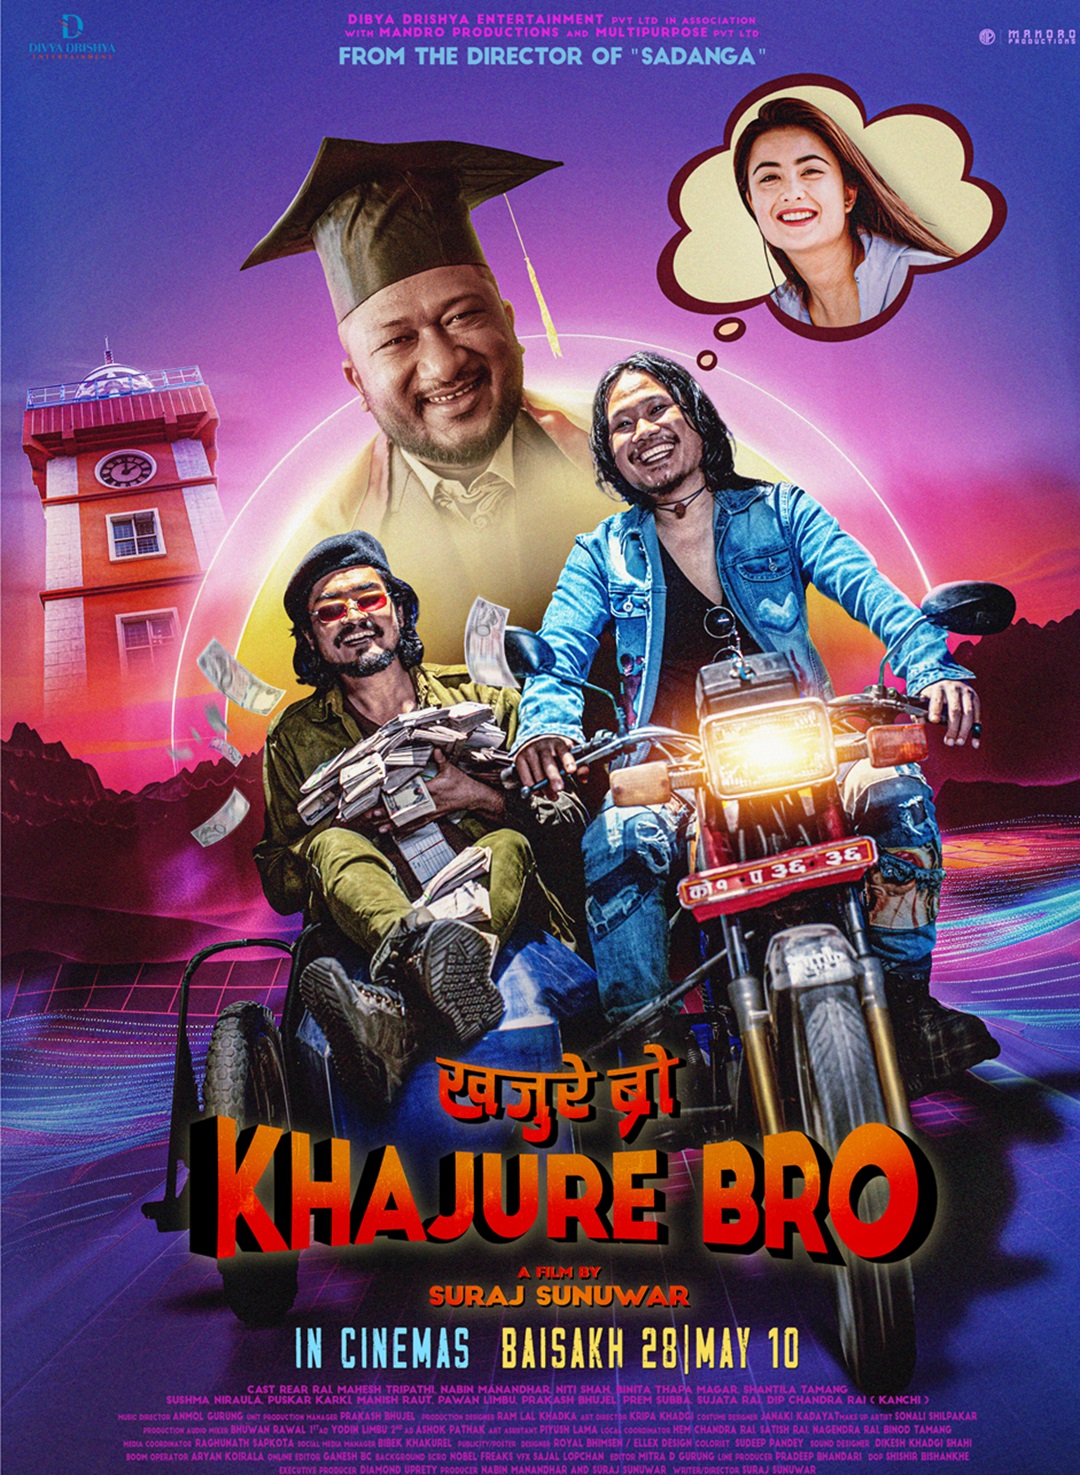 Khajure-bro-Poster-For-Insta-4x5--1712554860.jpg